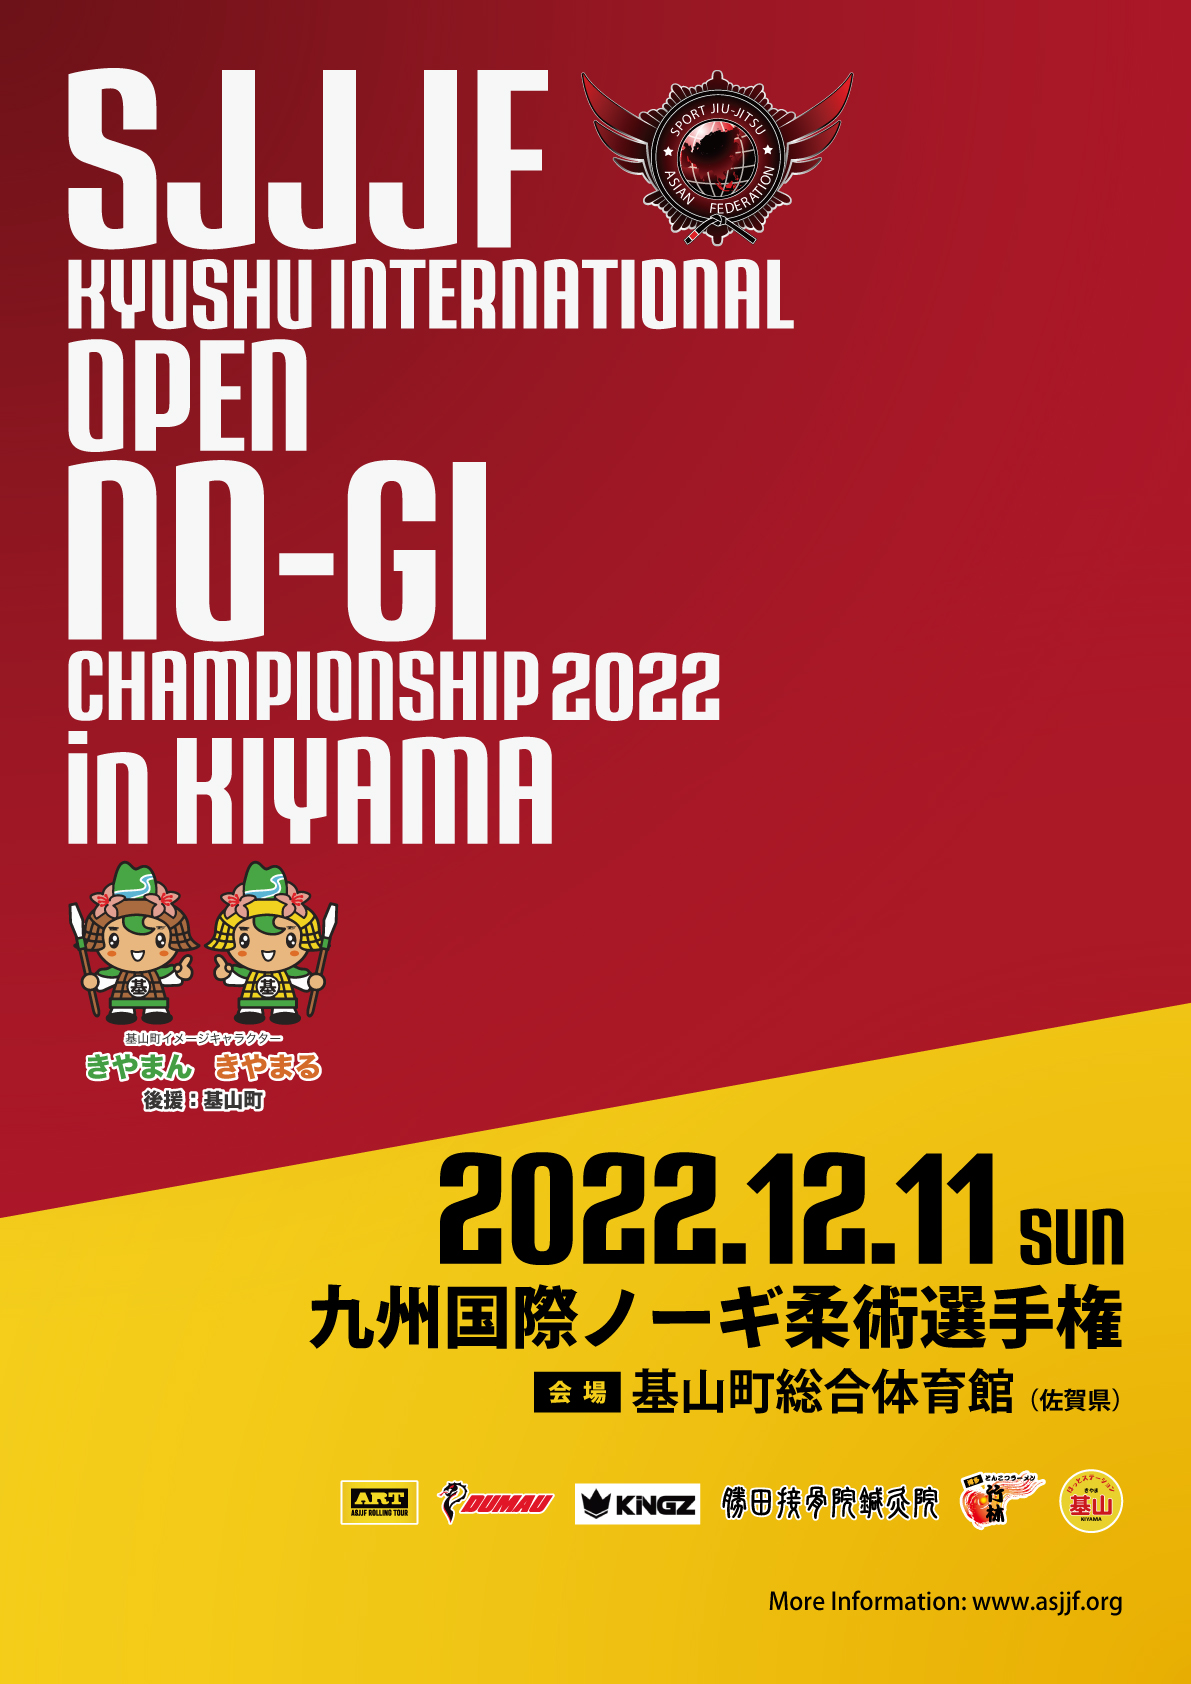 kyushu international open no-gi championship 2022